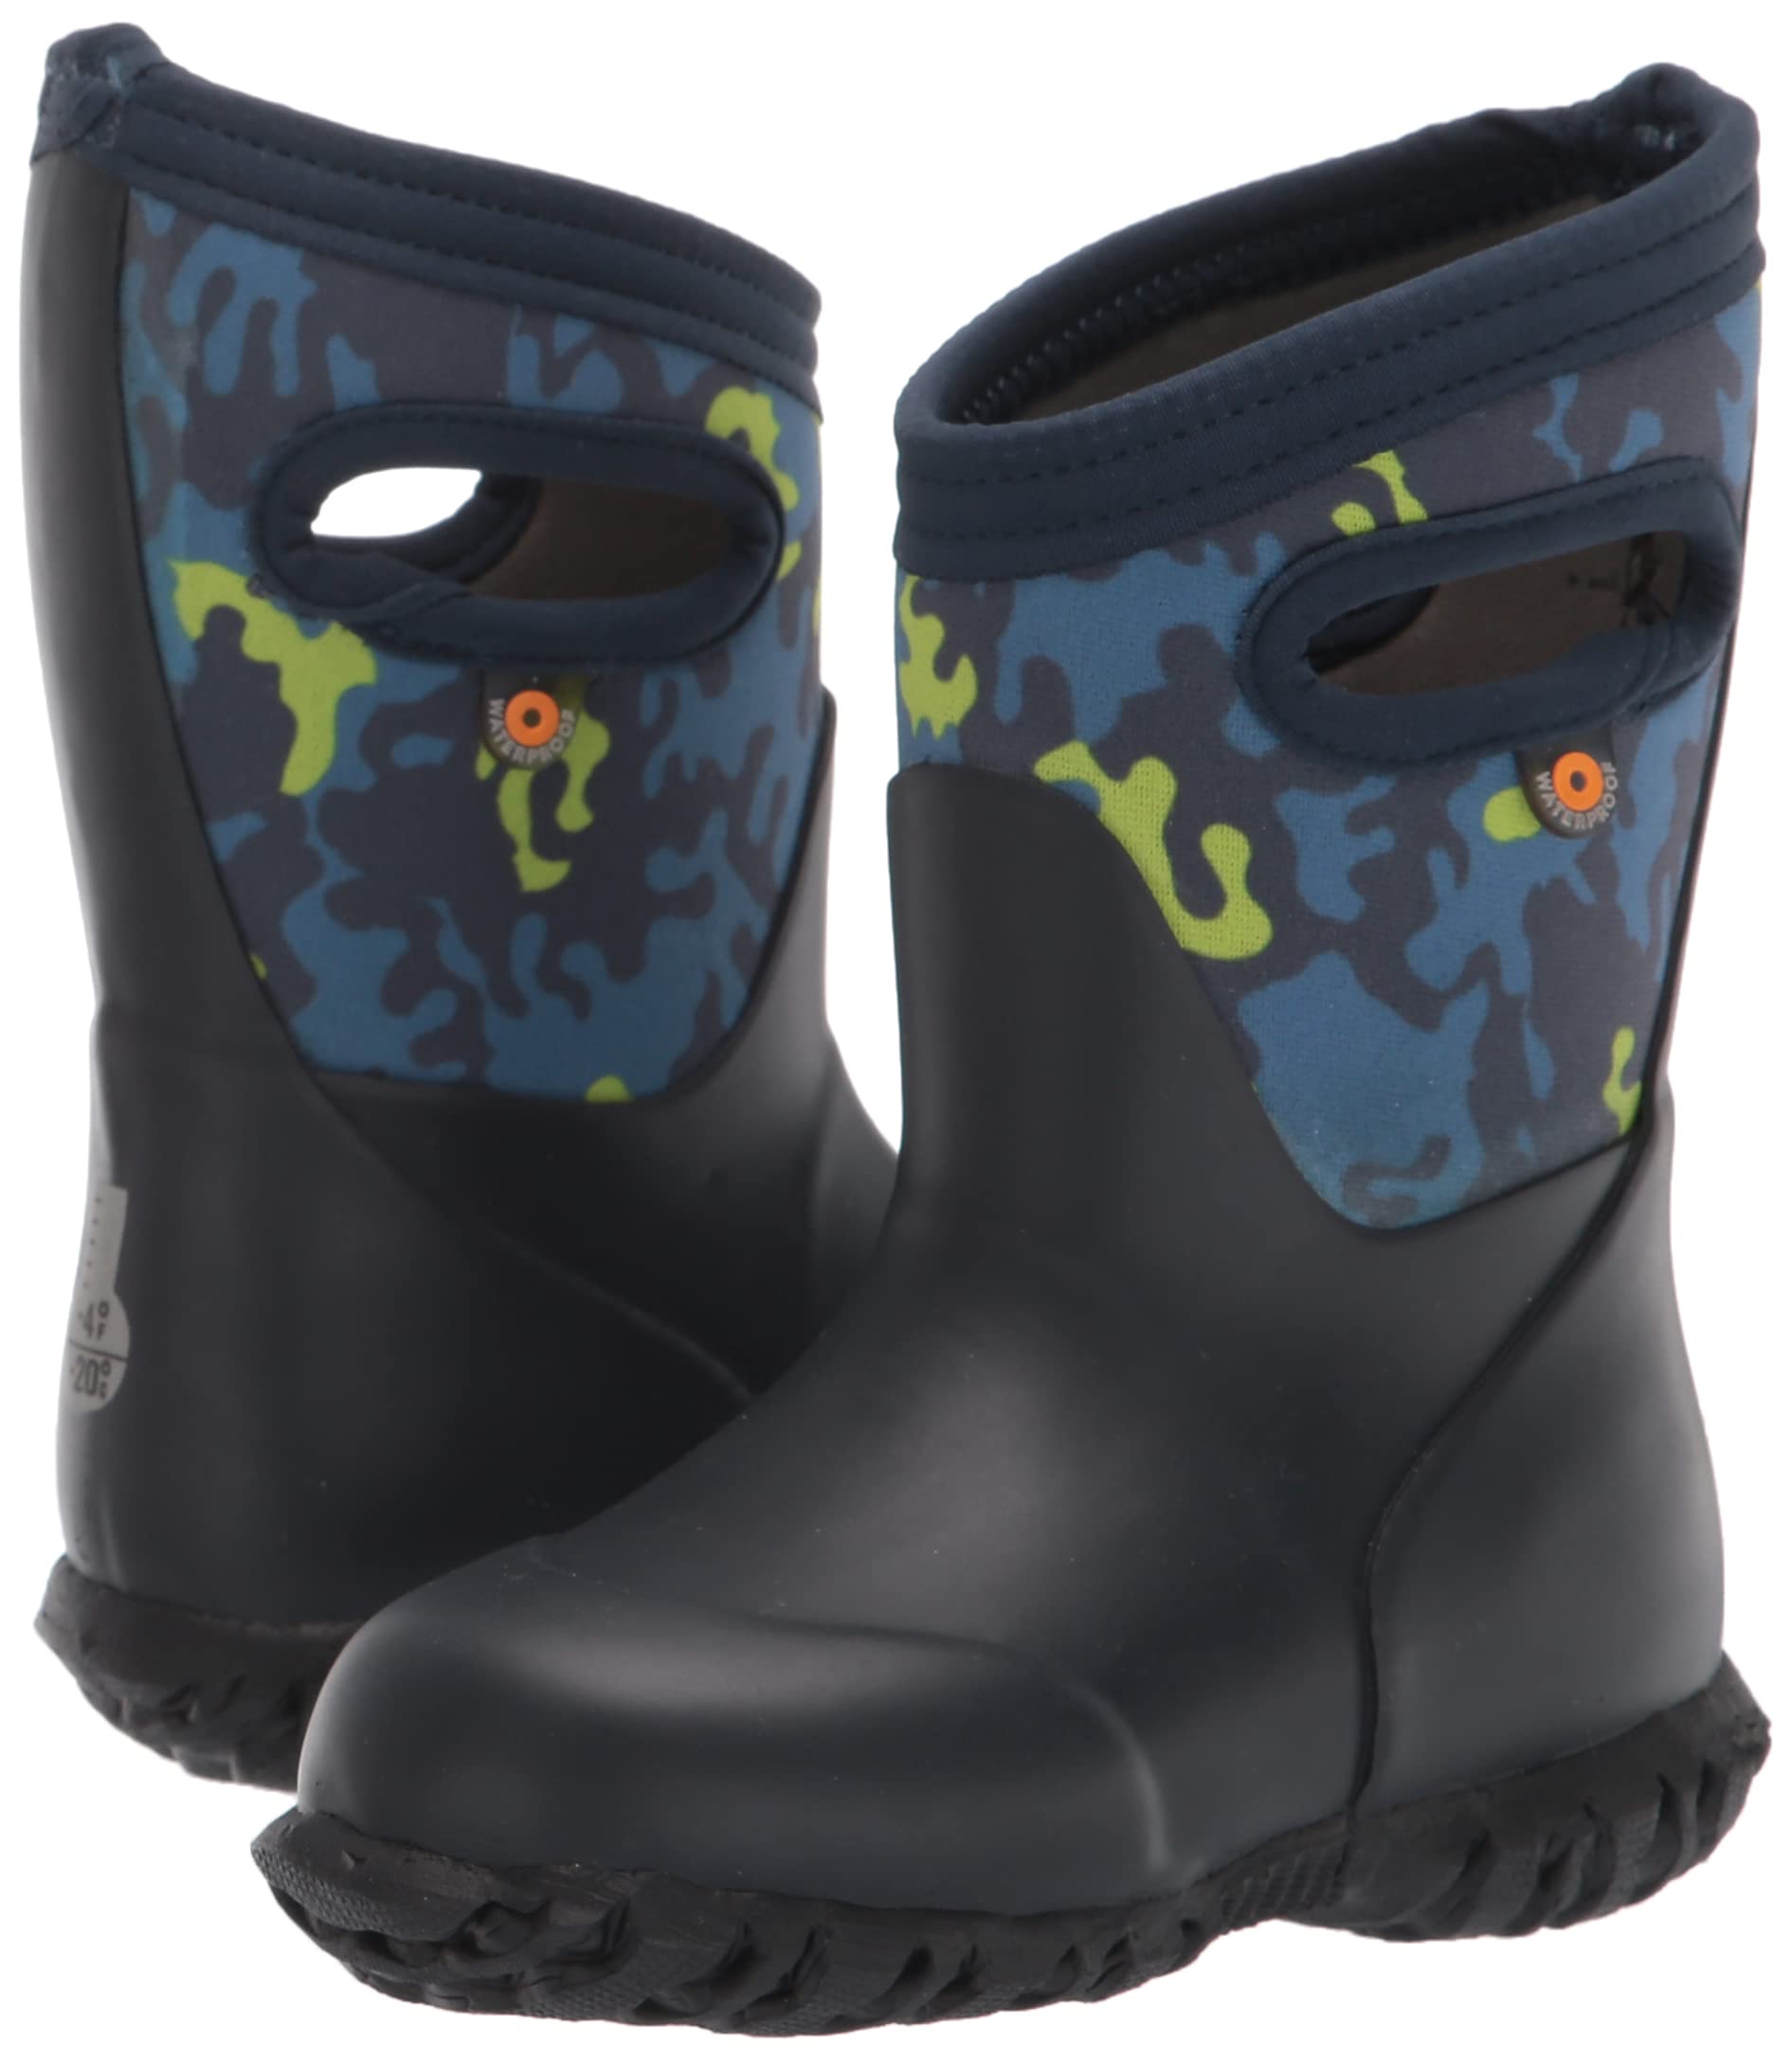 BOGS Unisex-Child York Boys and Girls Waterproof Insulated Rubber and Neoprene Winter Rain Boot